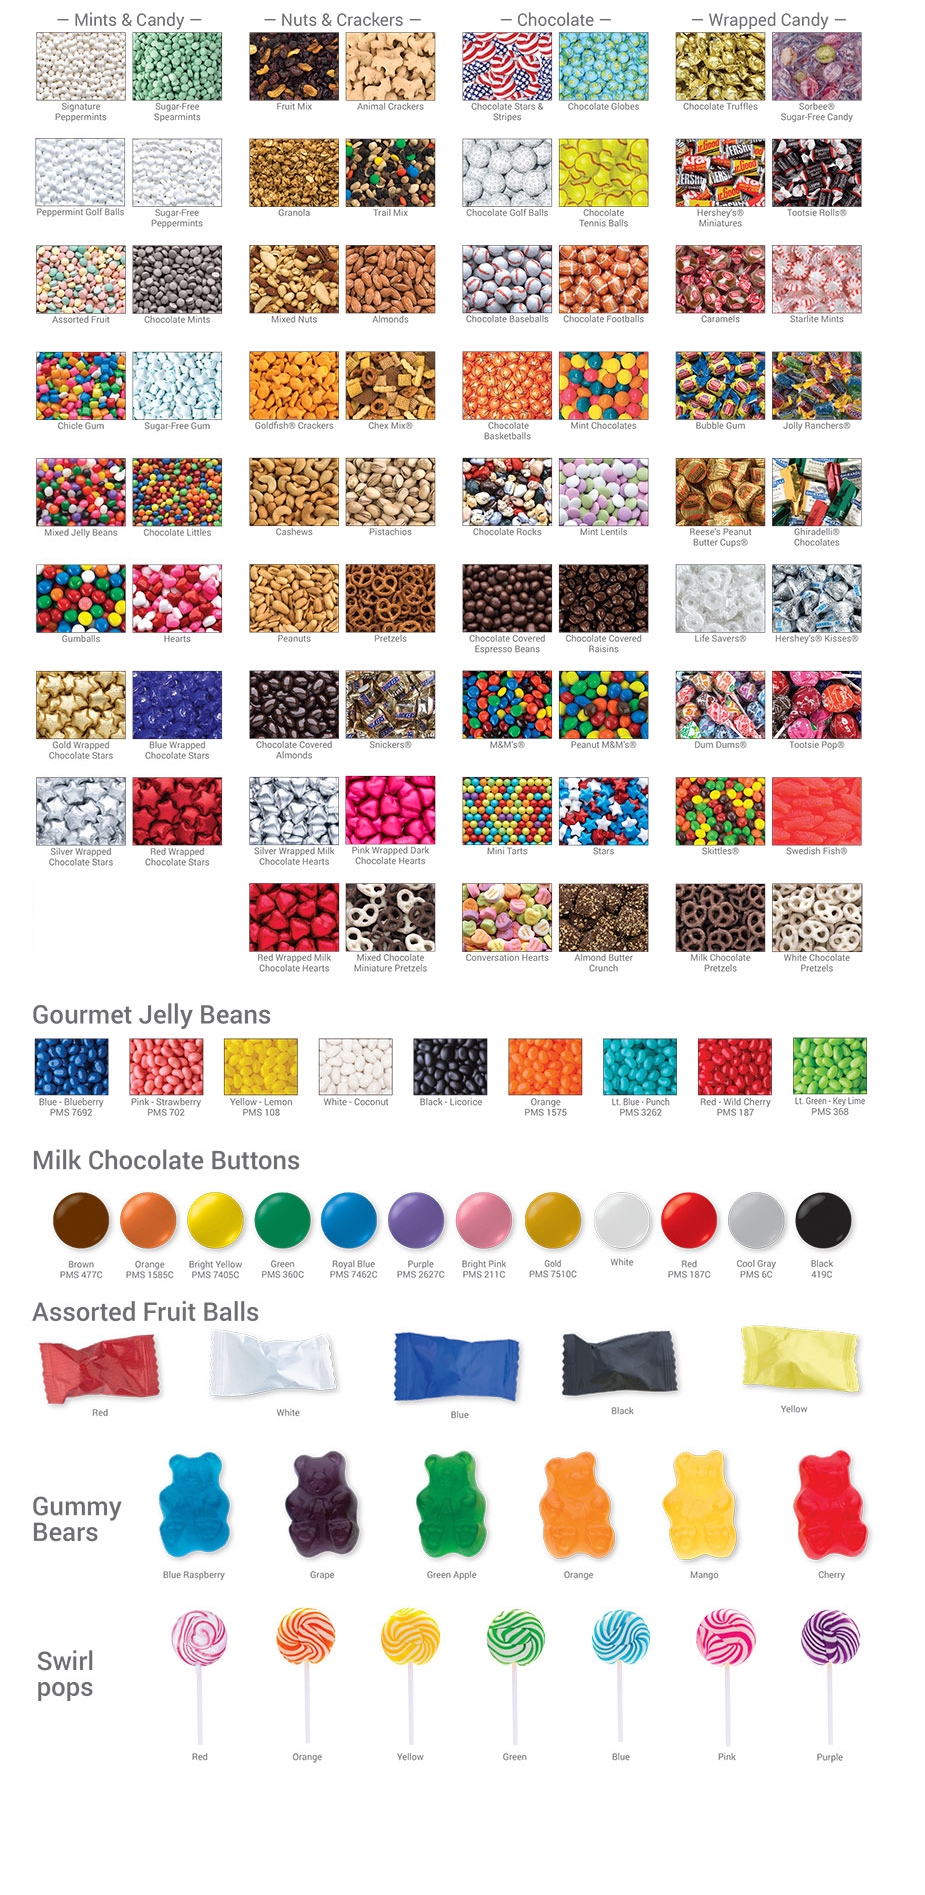 Standard Flavors & Fillings | Gourmet Jelly Beans | Candy Beads | Milk Chocolate Buttons | Assorted Fruit Balls | Gummy Bears | Swirl Pops